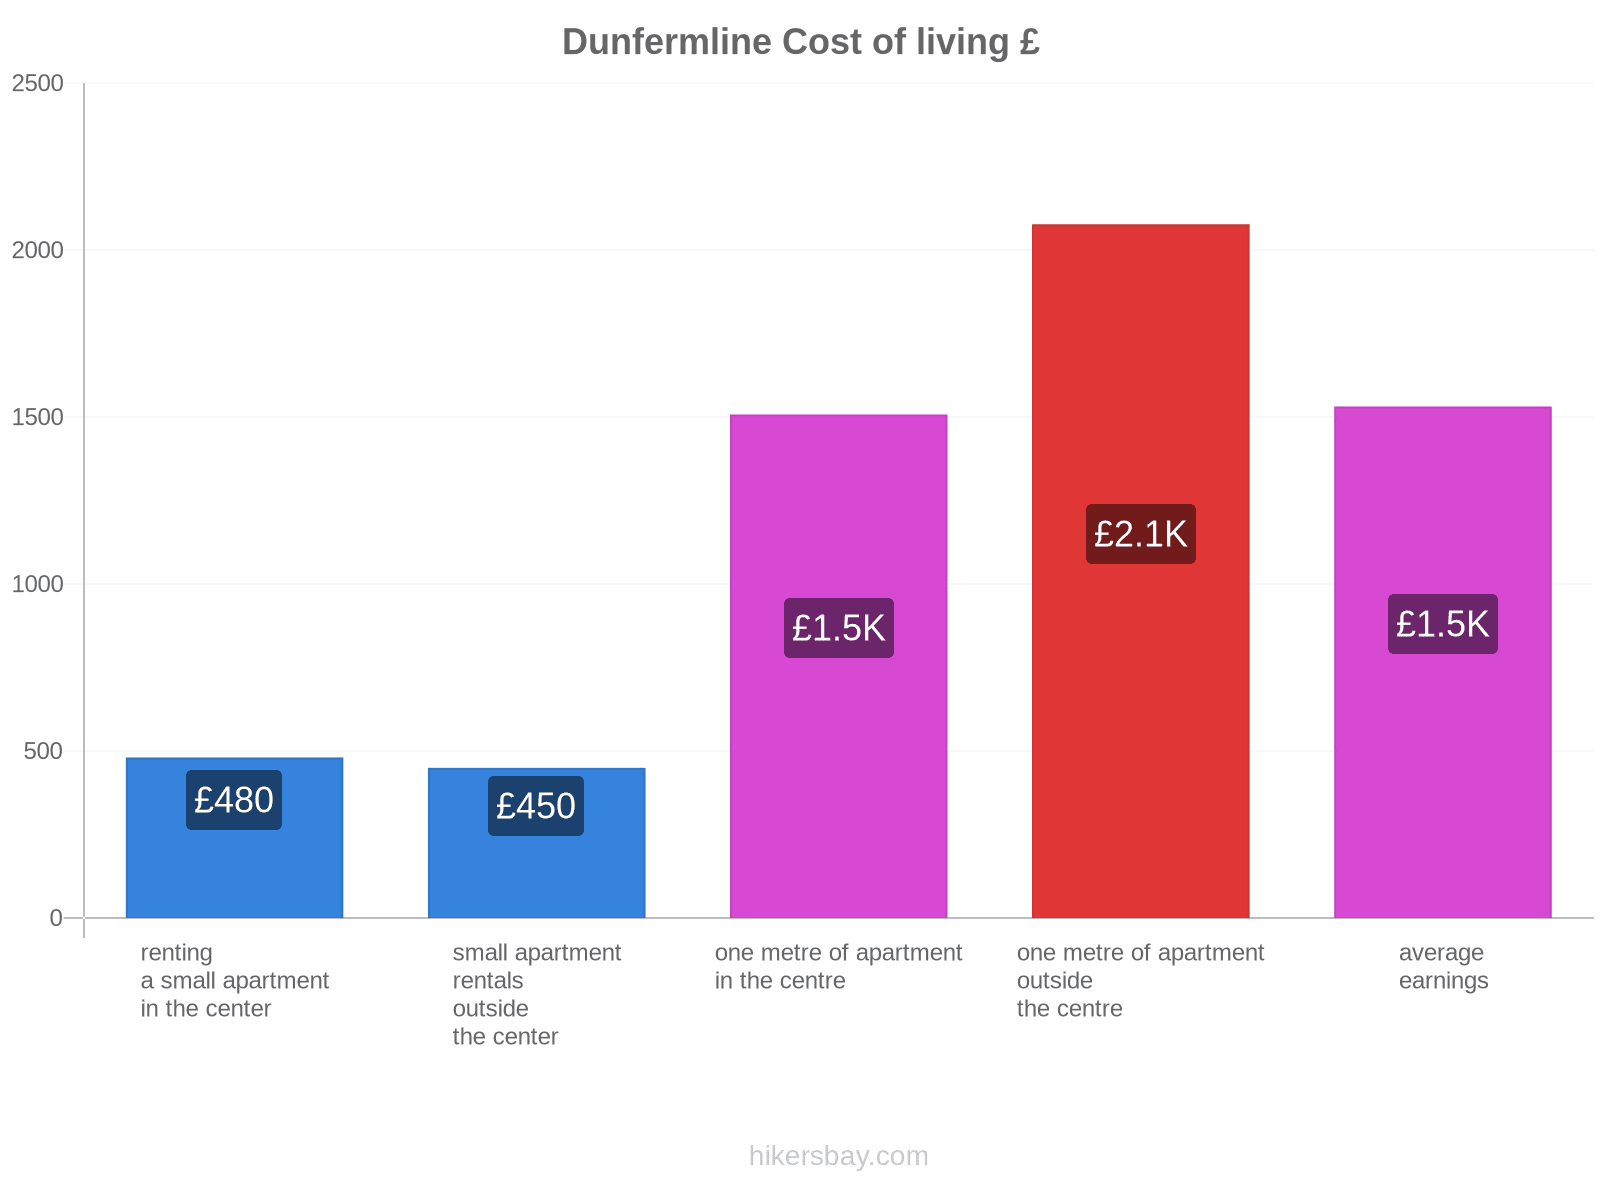 Dunfermline cost of living hikersbay.com